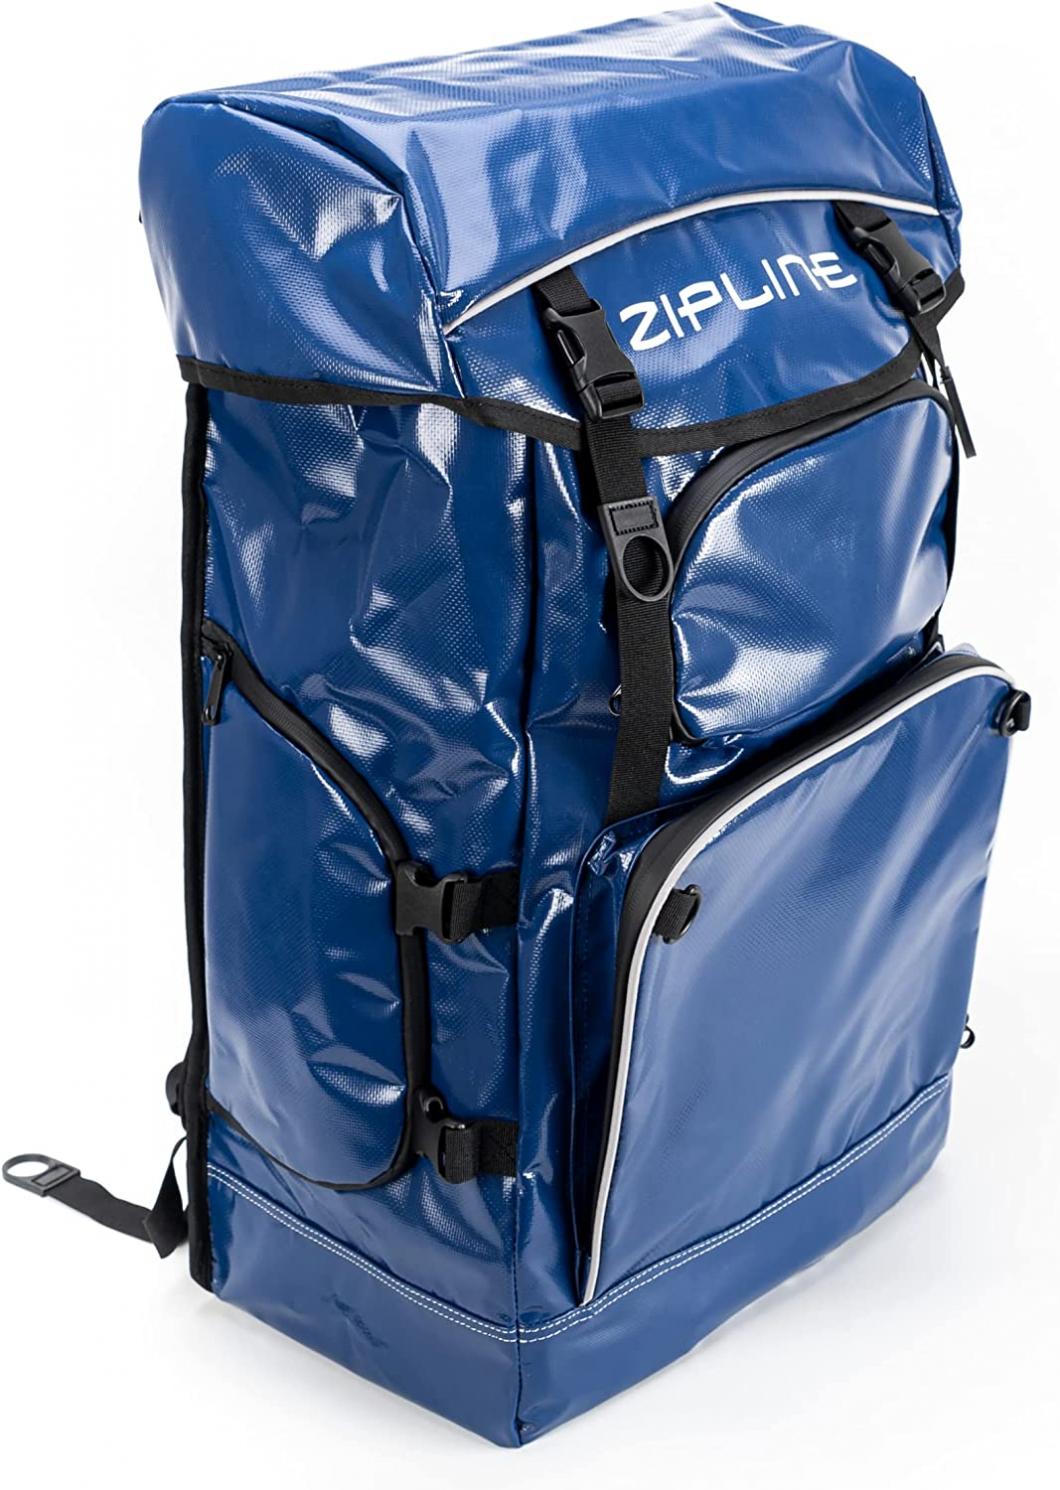 Zipline World Cup Ski Boot Bag Backpack – Waterproof Skiing and Snowboarding Luggage